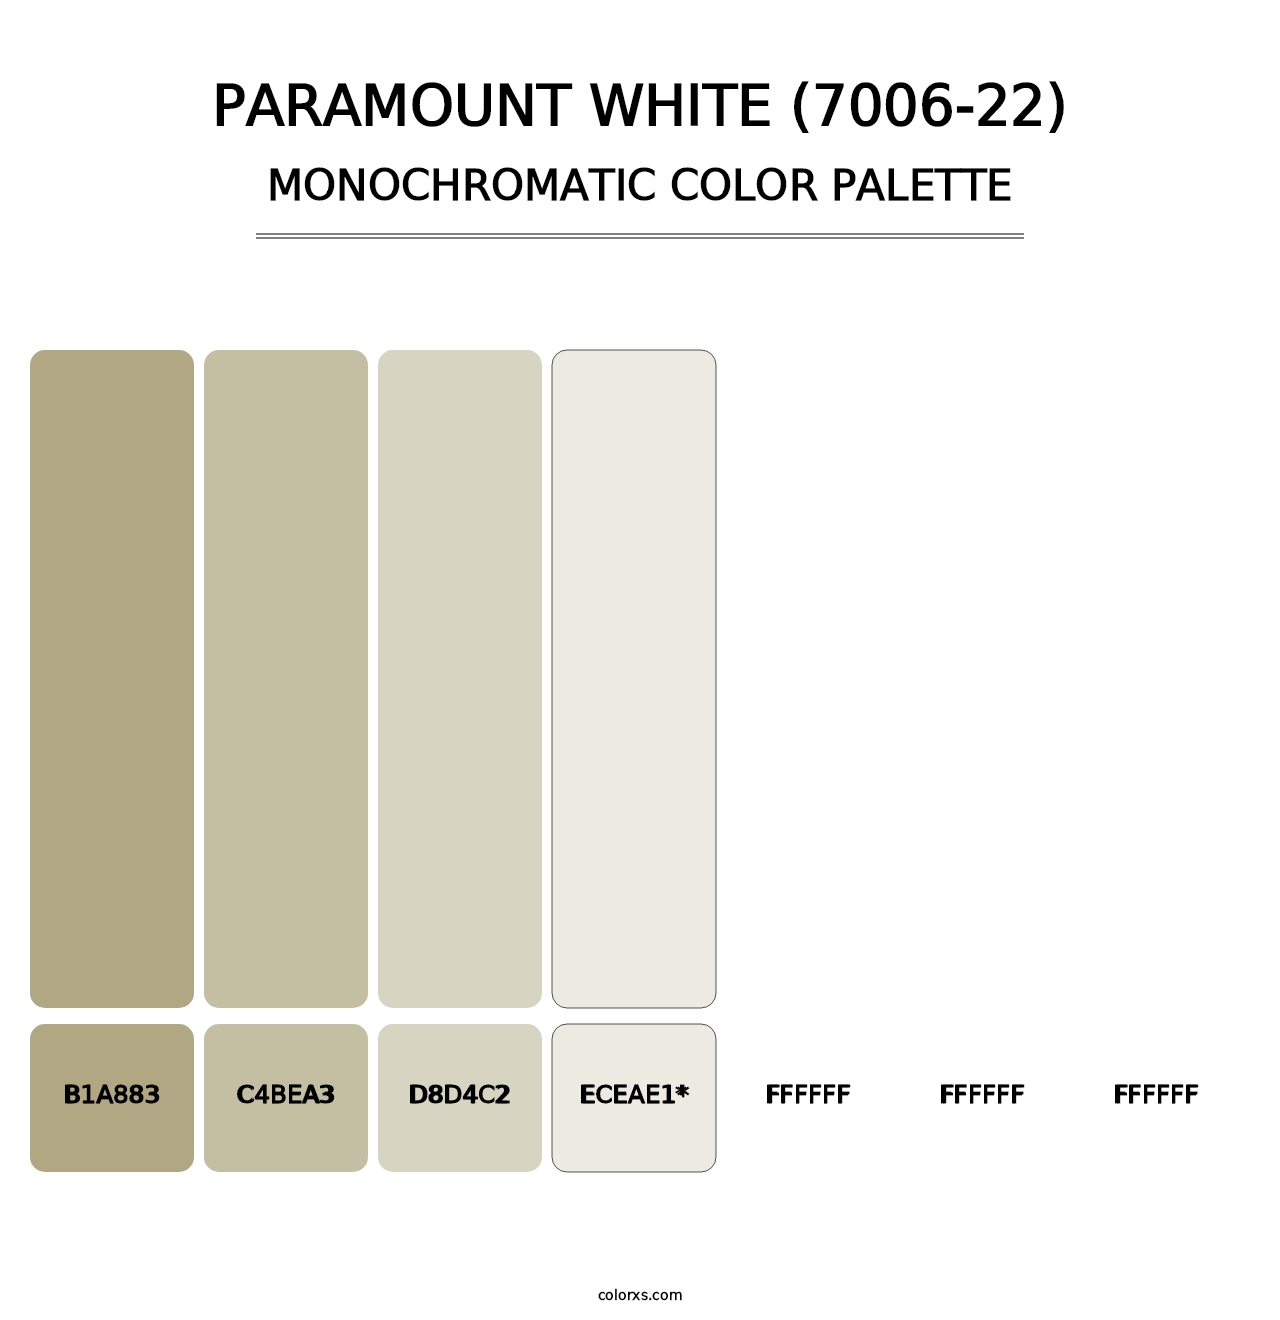 Paramount White (7006-22) - Monochromatic Color Palette